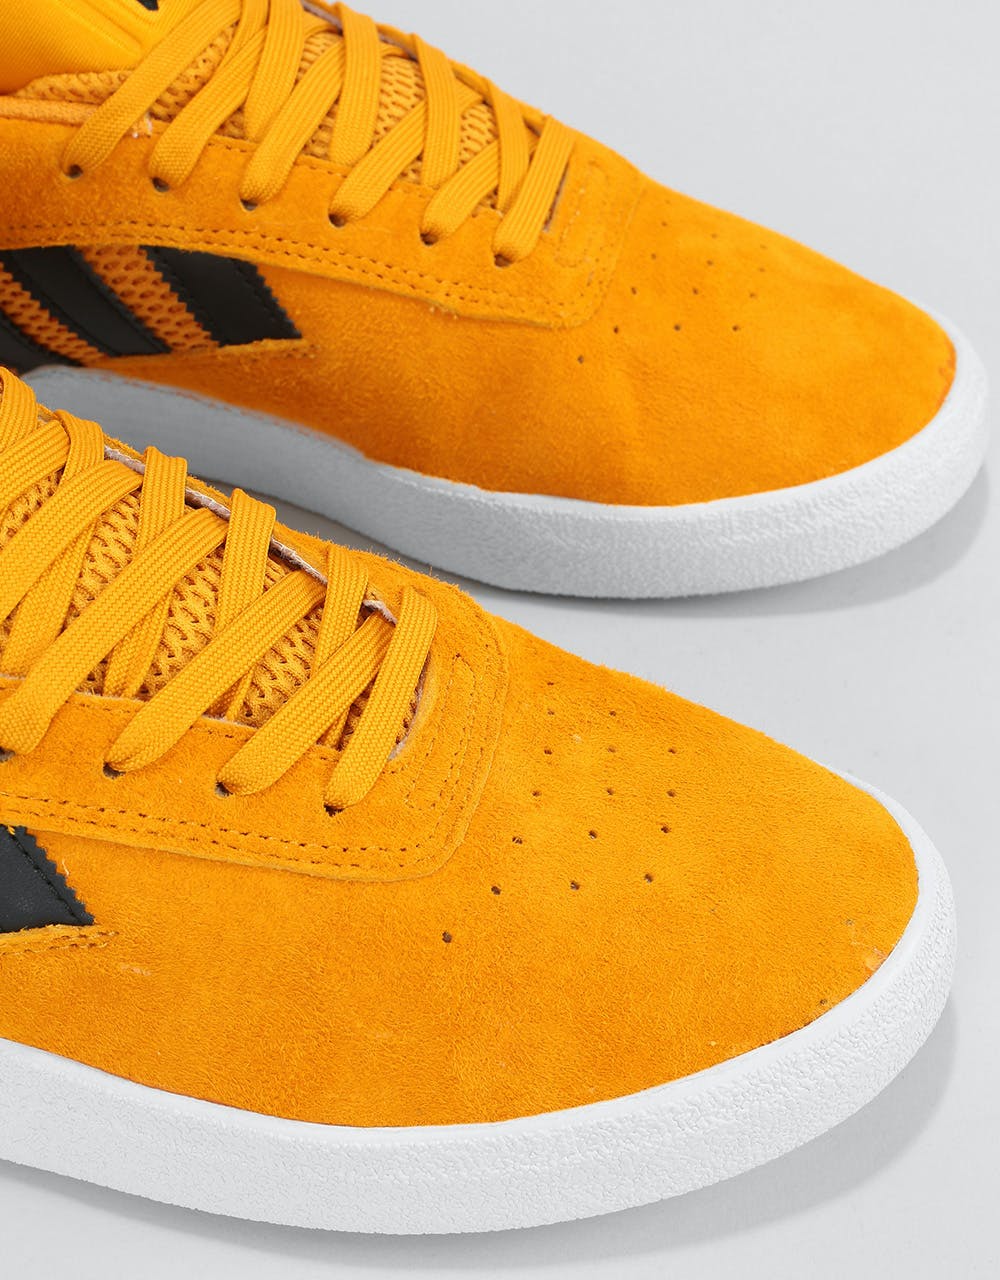 Adidas 3ST.004 Skate Shoes - Tactile Yellow/Core Black/Gold Metallic